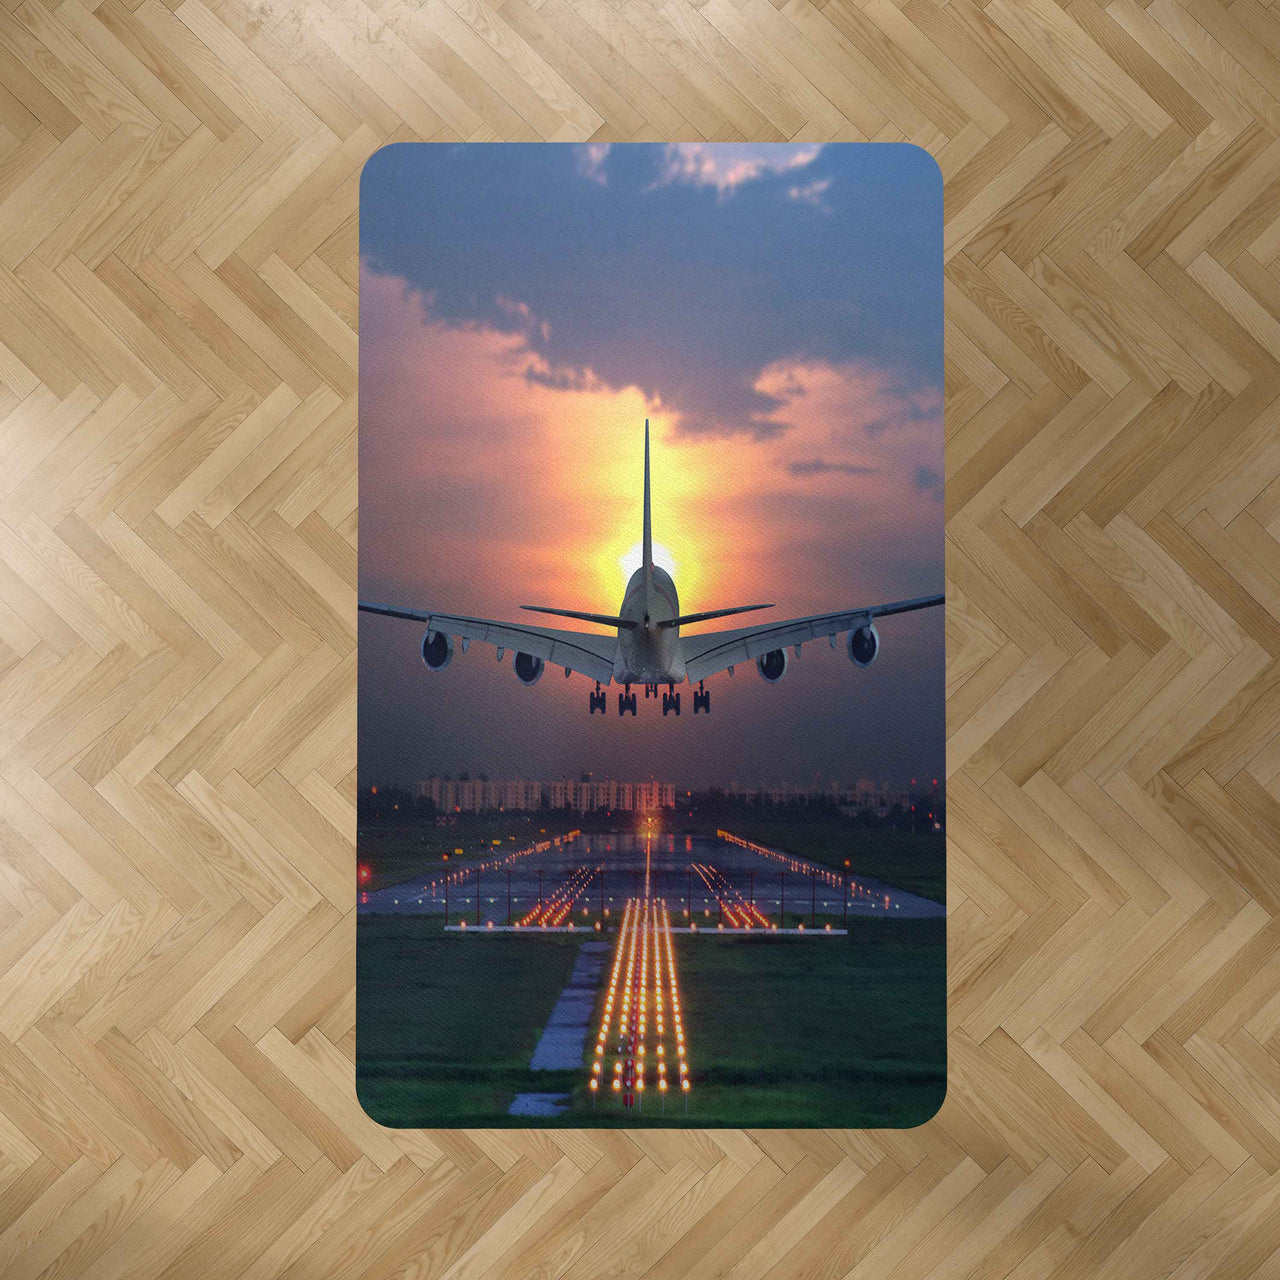 Super Airbus A380 Landing During Sunset Designed Carpet & Floor Mats